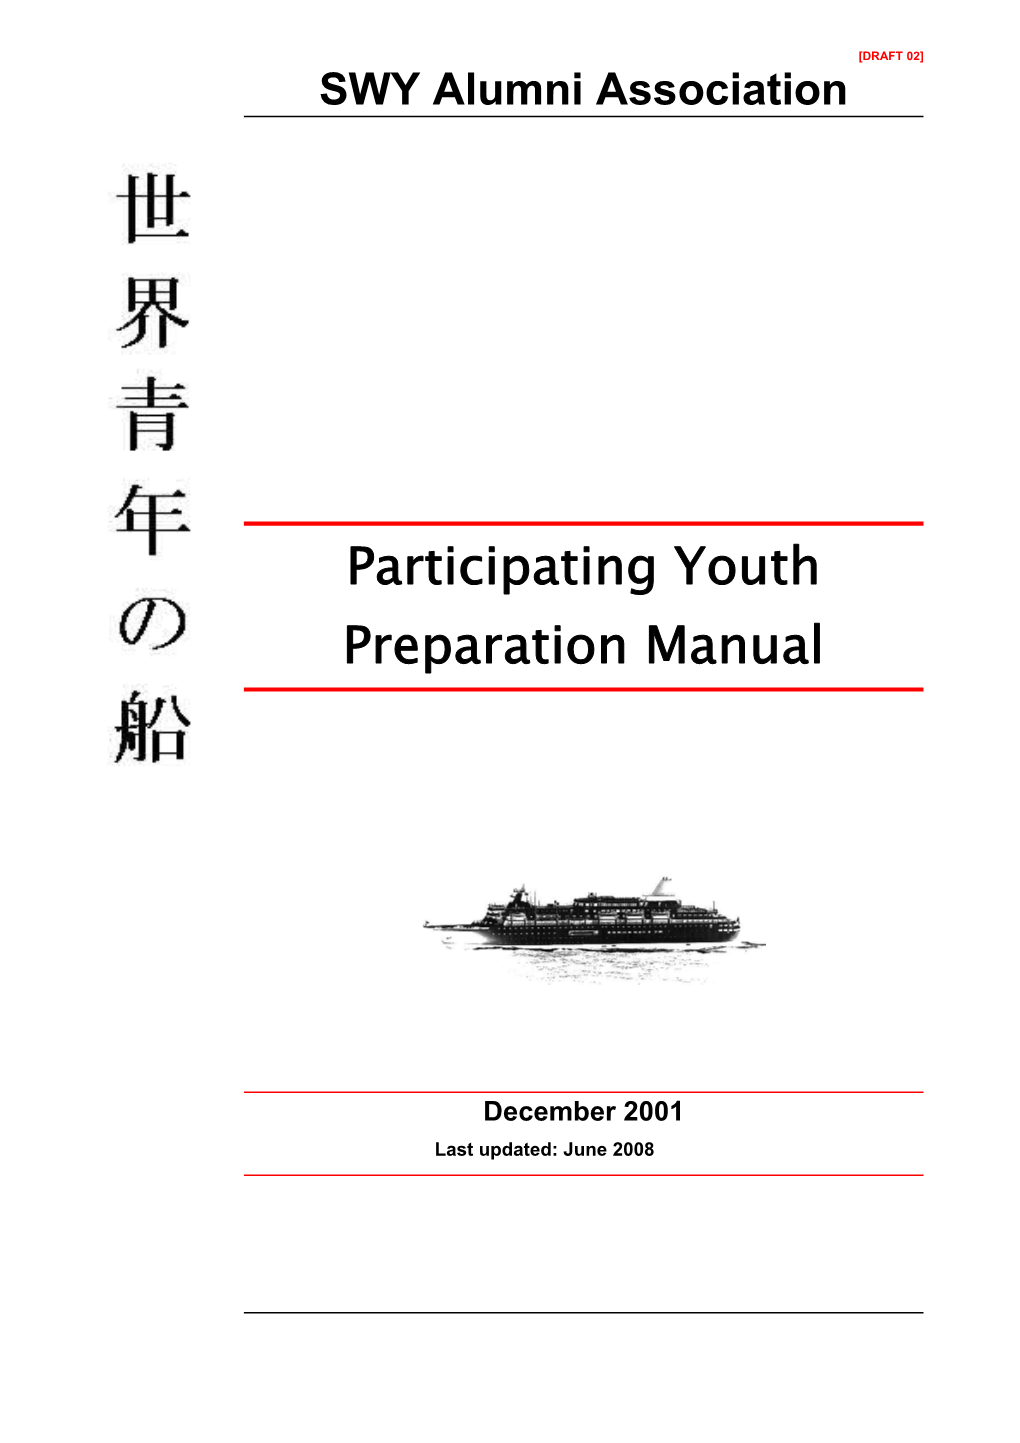 Participating Youth Preparation Manual